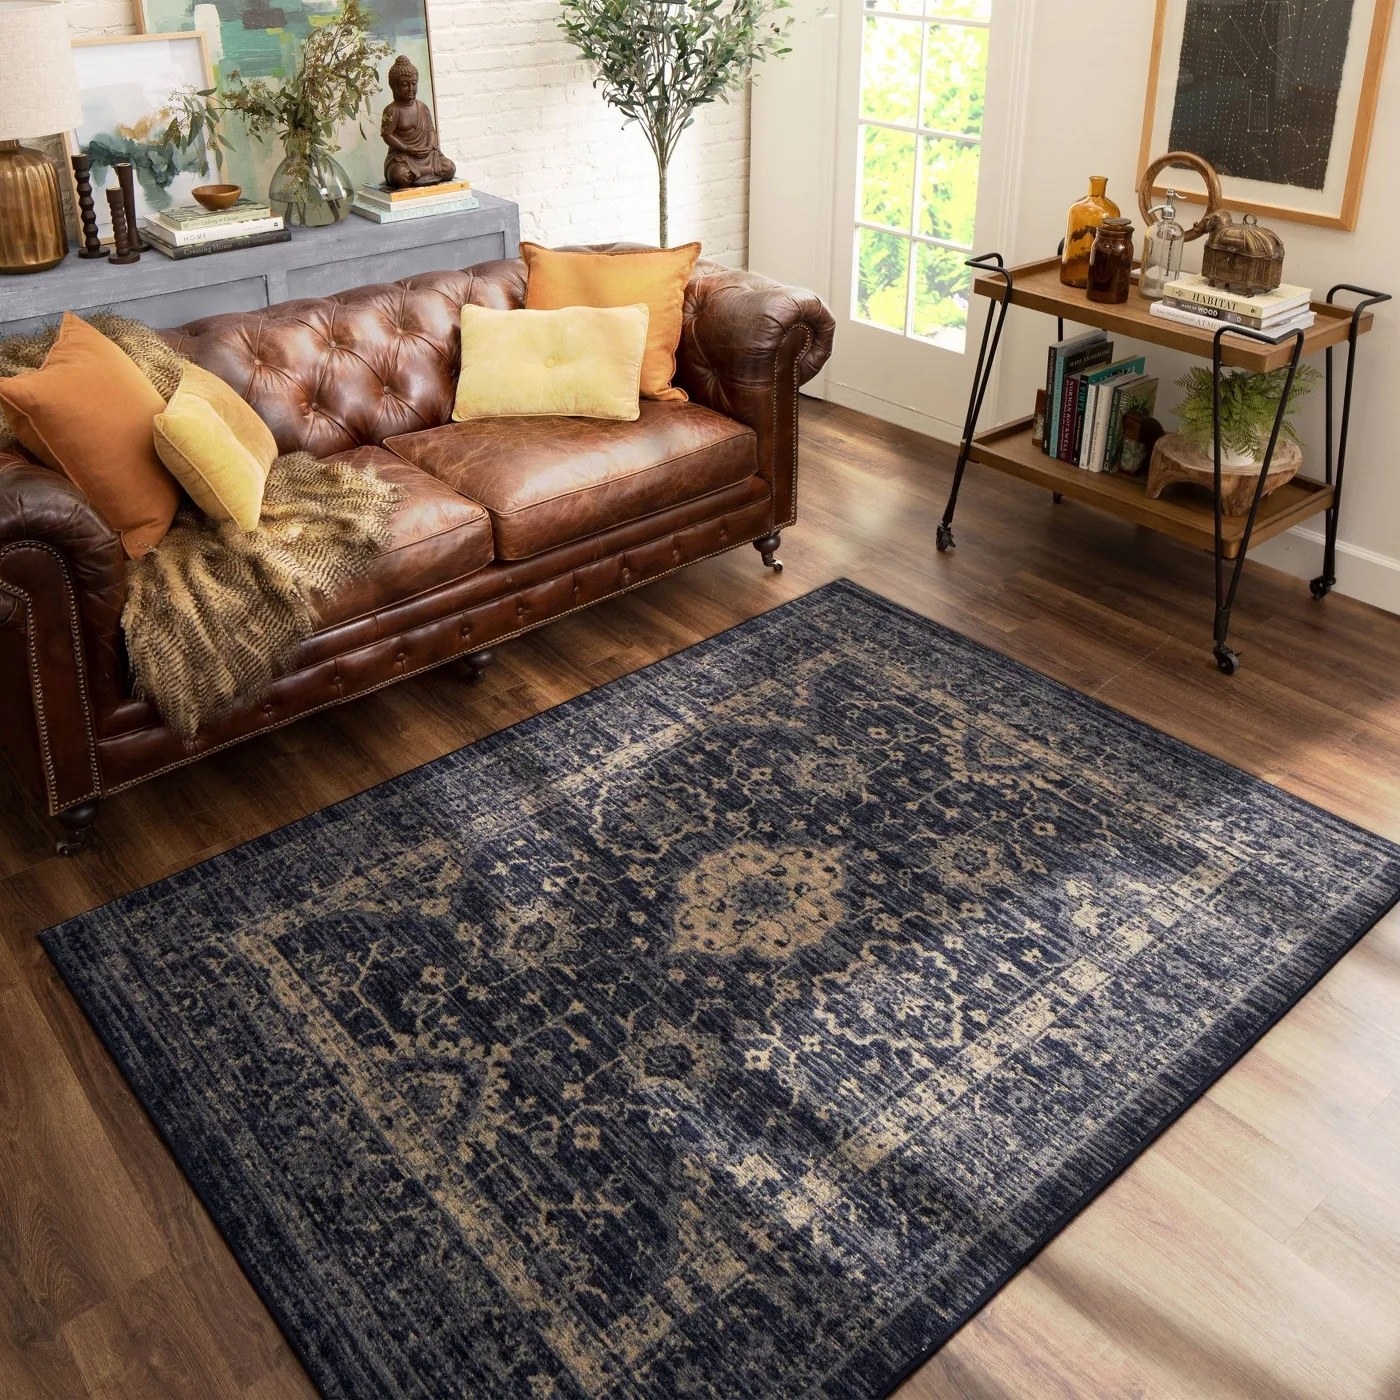 a vintage Persian rug